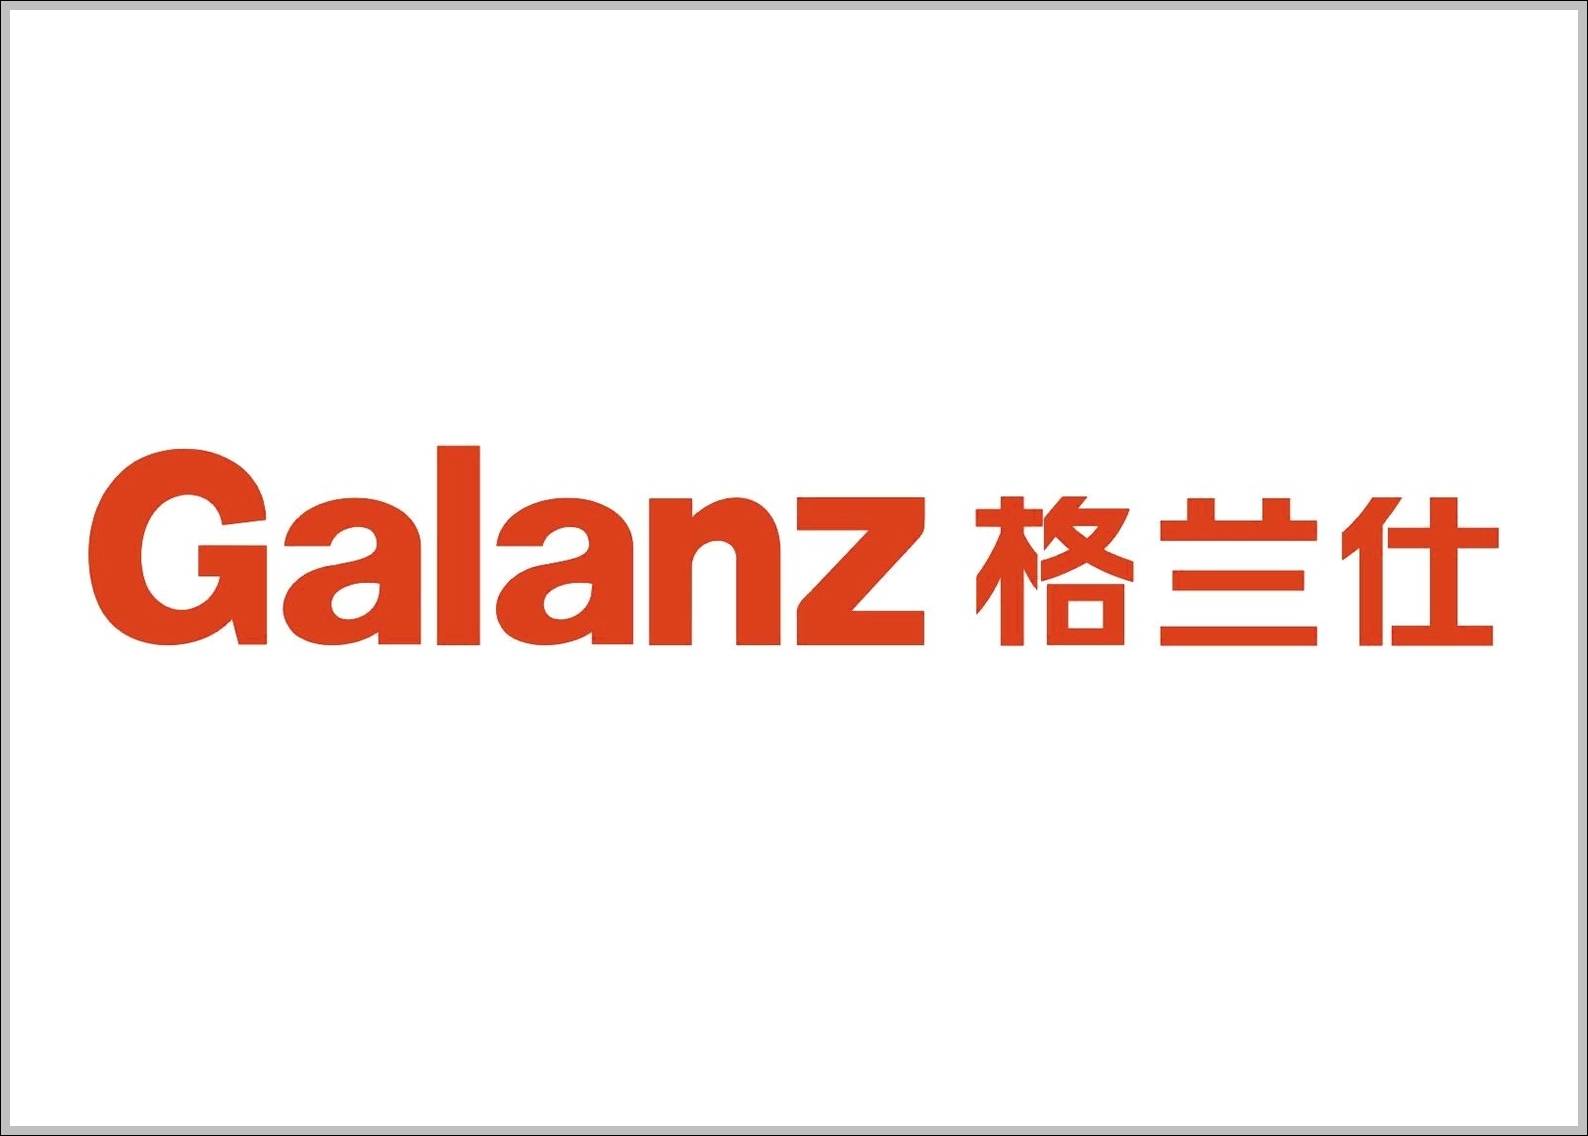 Galanz logo and sign